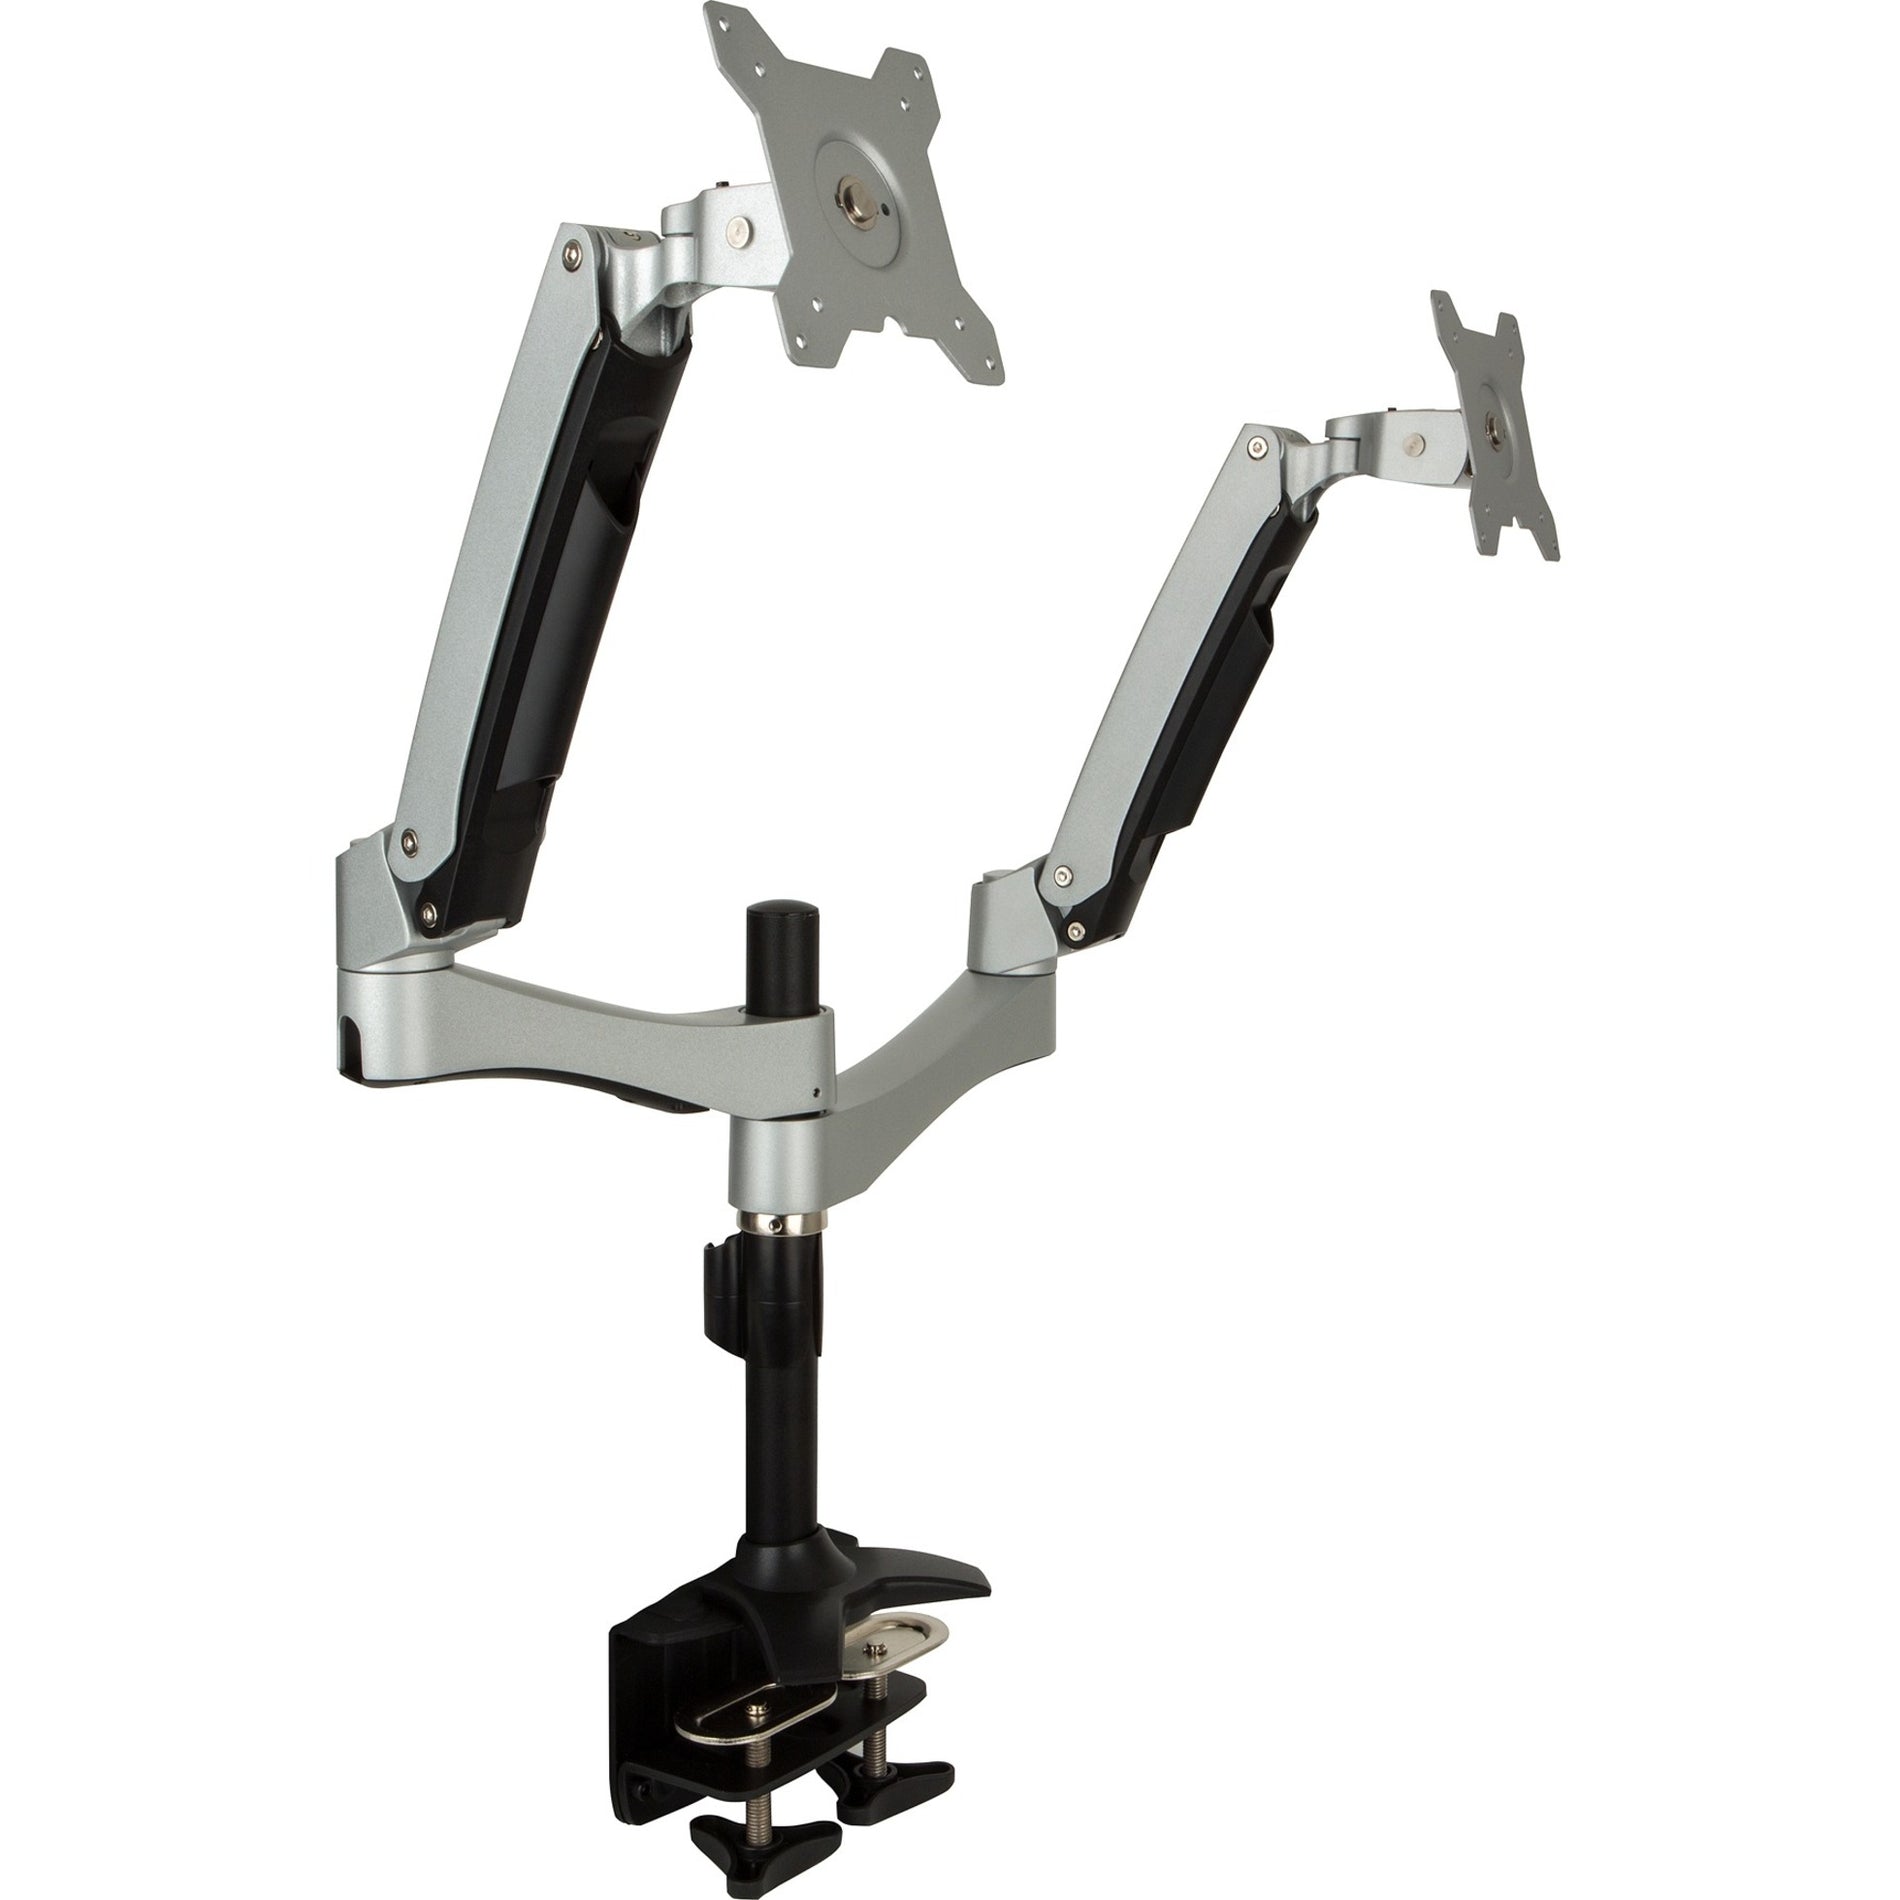 Planar 997-7031-00 Dual Arm Desk Stand, Cable Management, Tilt, Rotate, Swivel, 22.10 lb Maximum Load Capacity